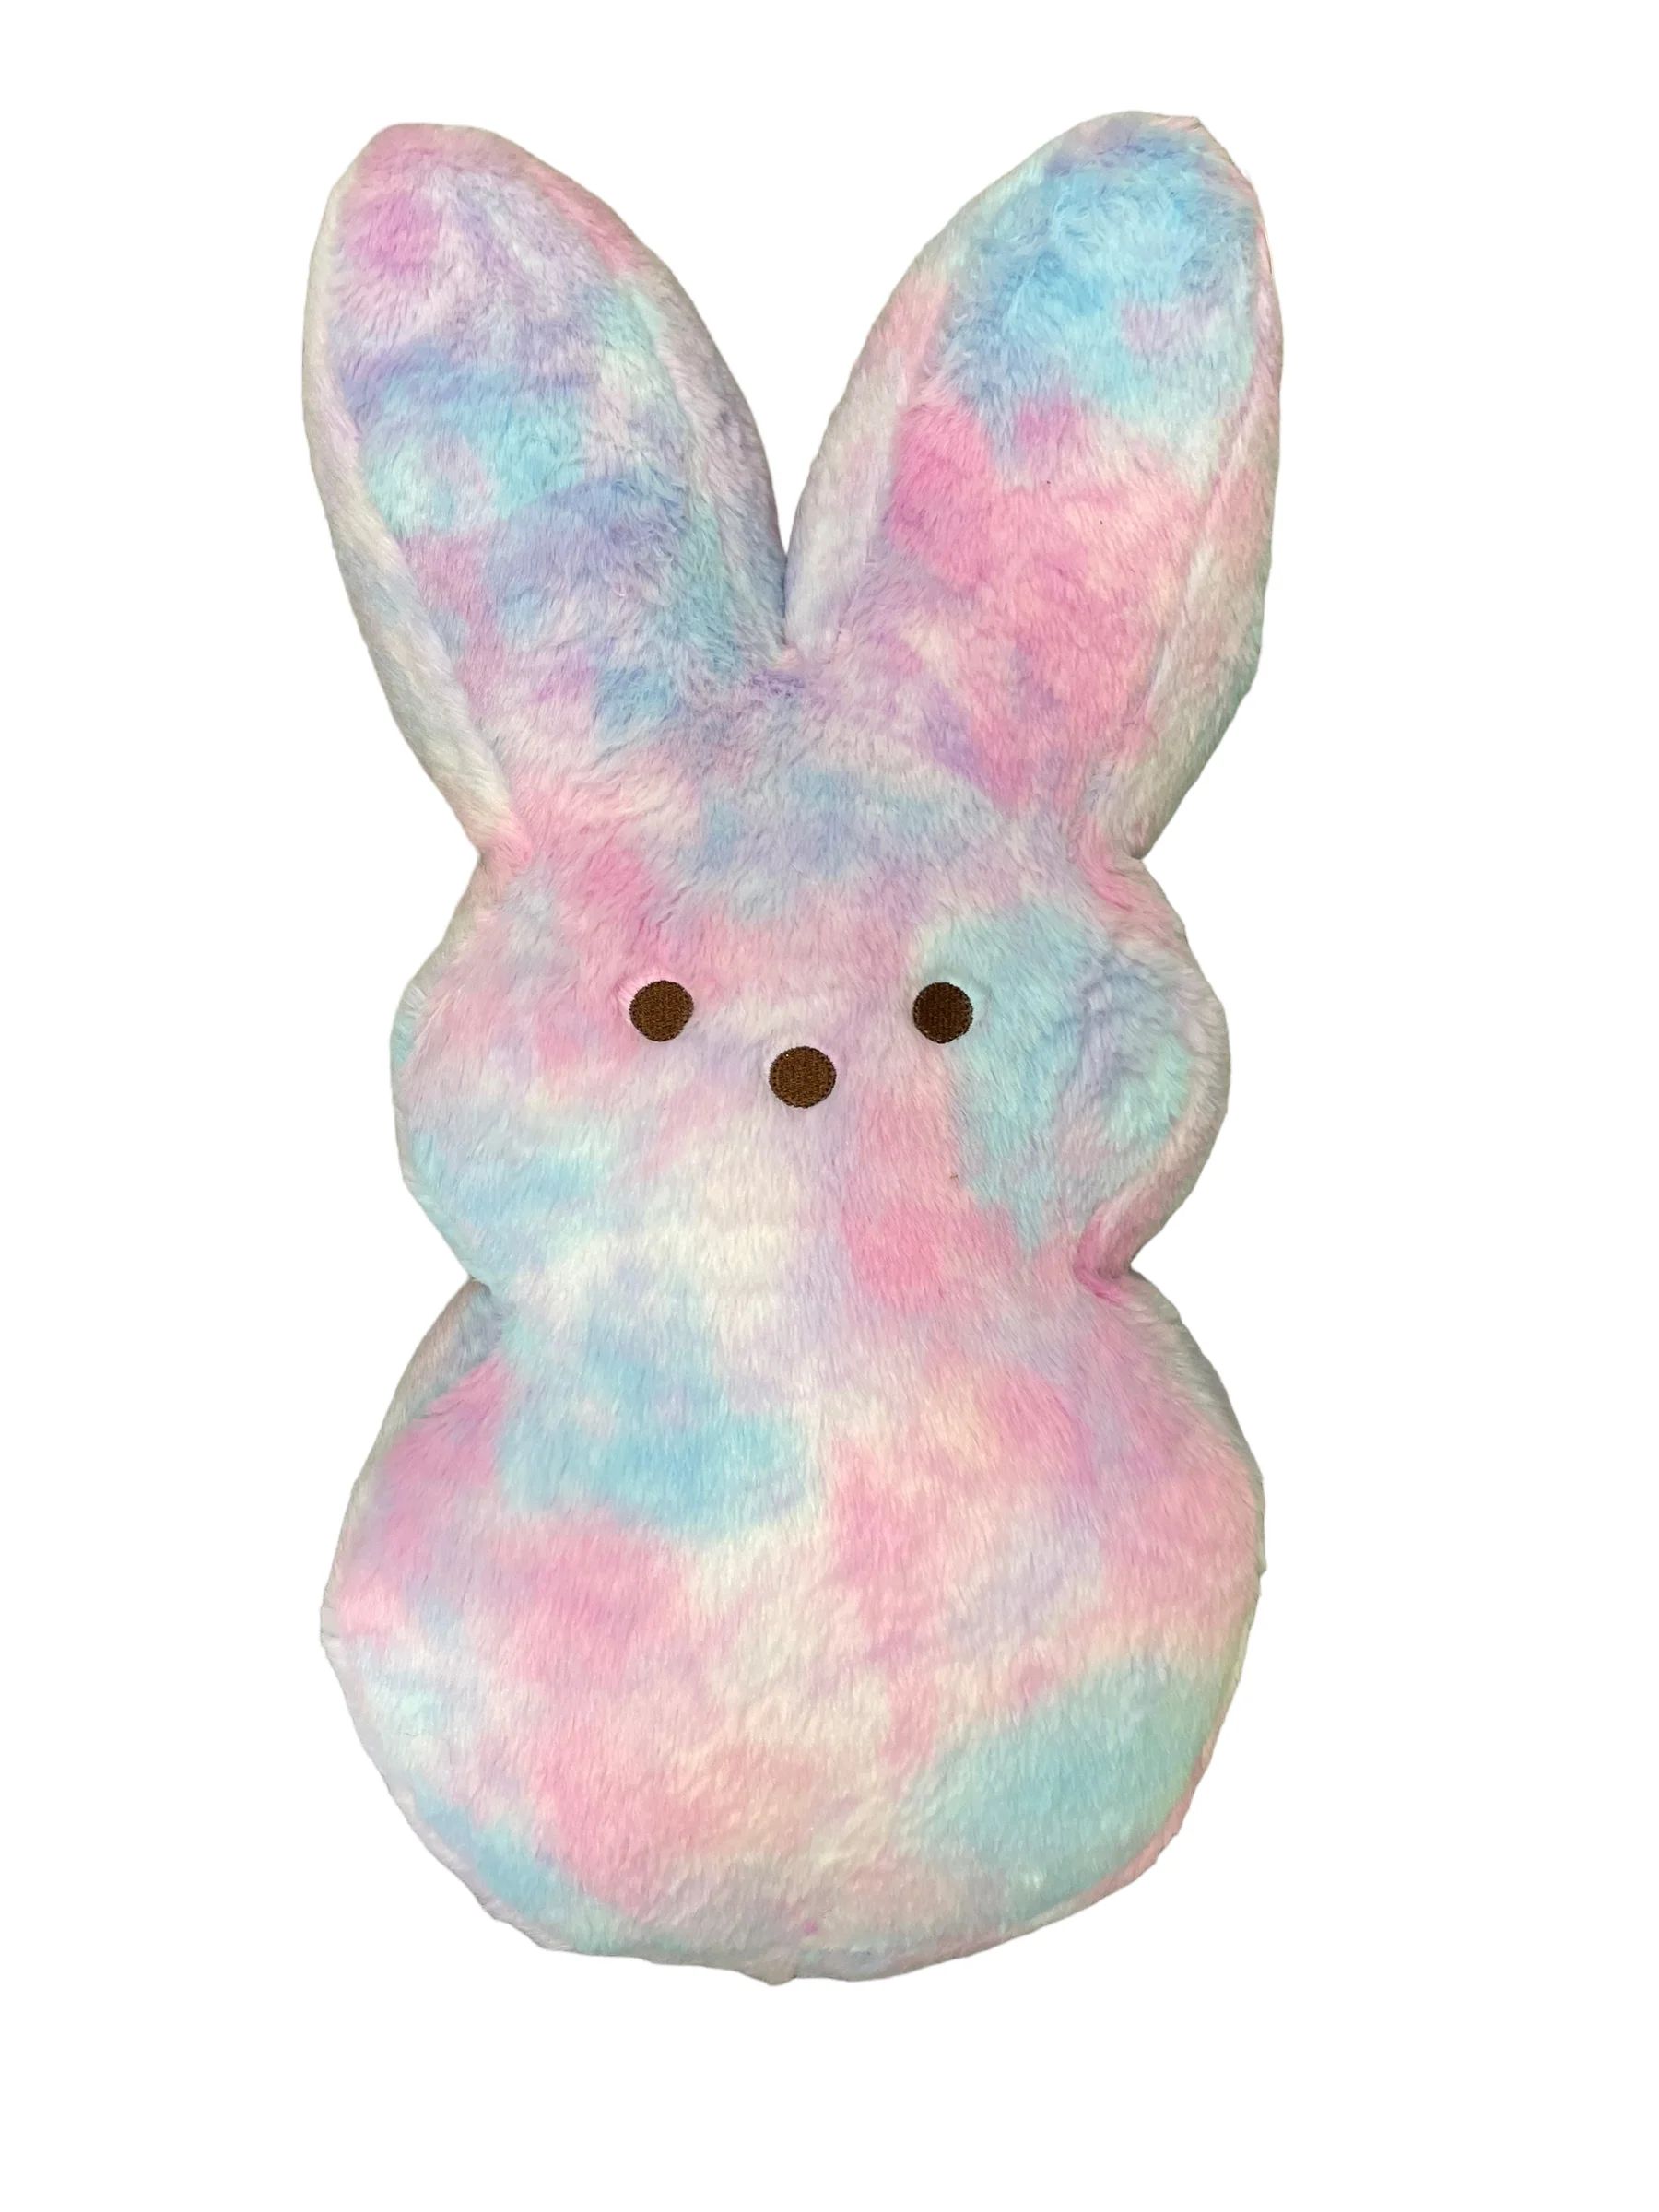 PEEPS Soft Pink Peep Plush Bunny Stuffed Animal - Large Edition - Blue Pink Tie Dyed 22 Inch | Walmart (US)